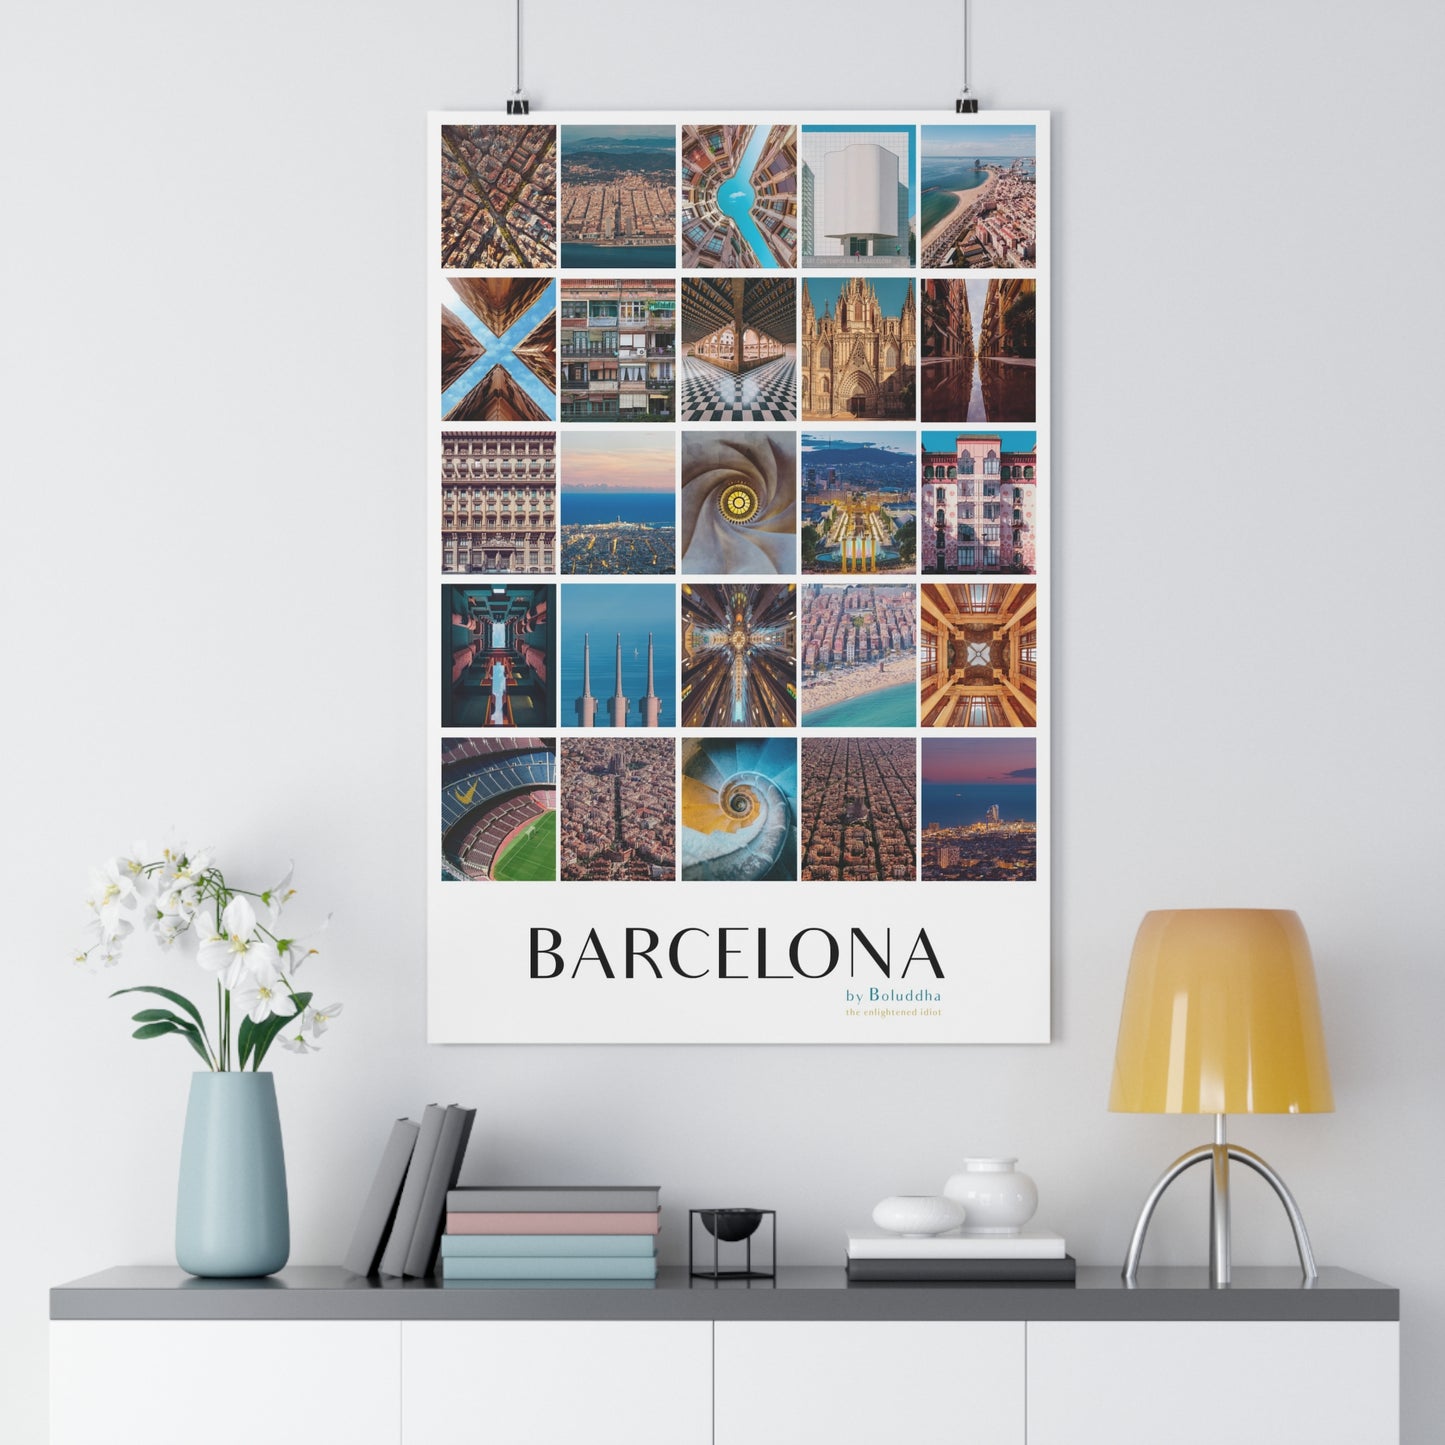 Barcelona by Boluddha